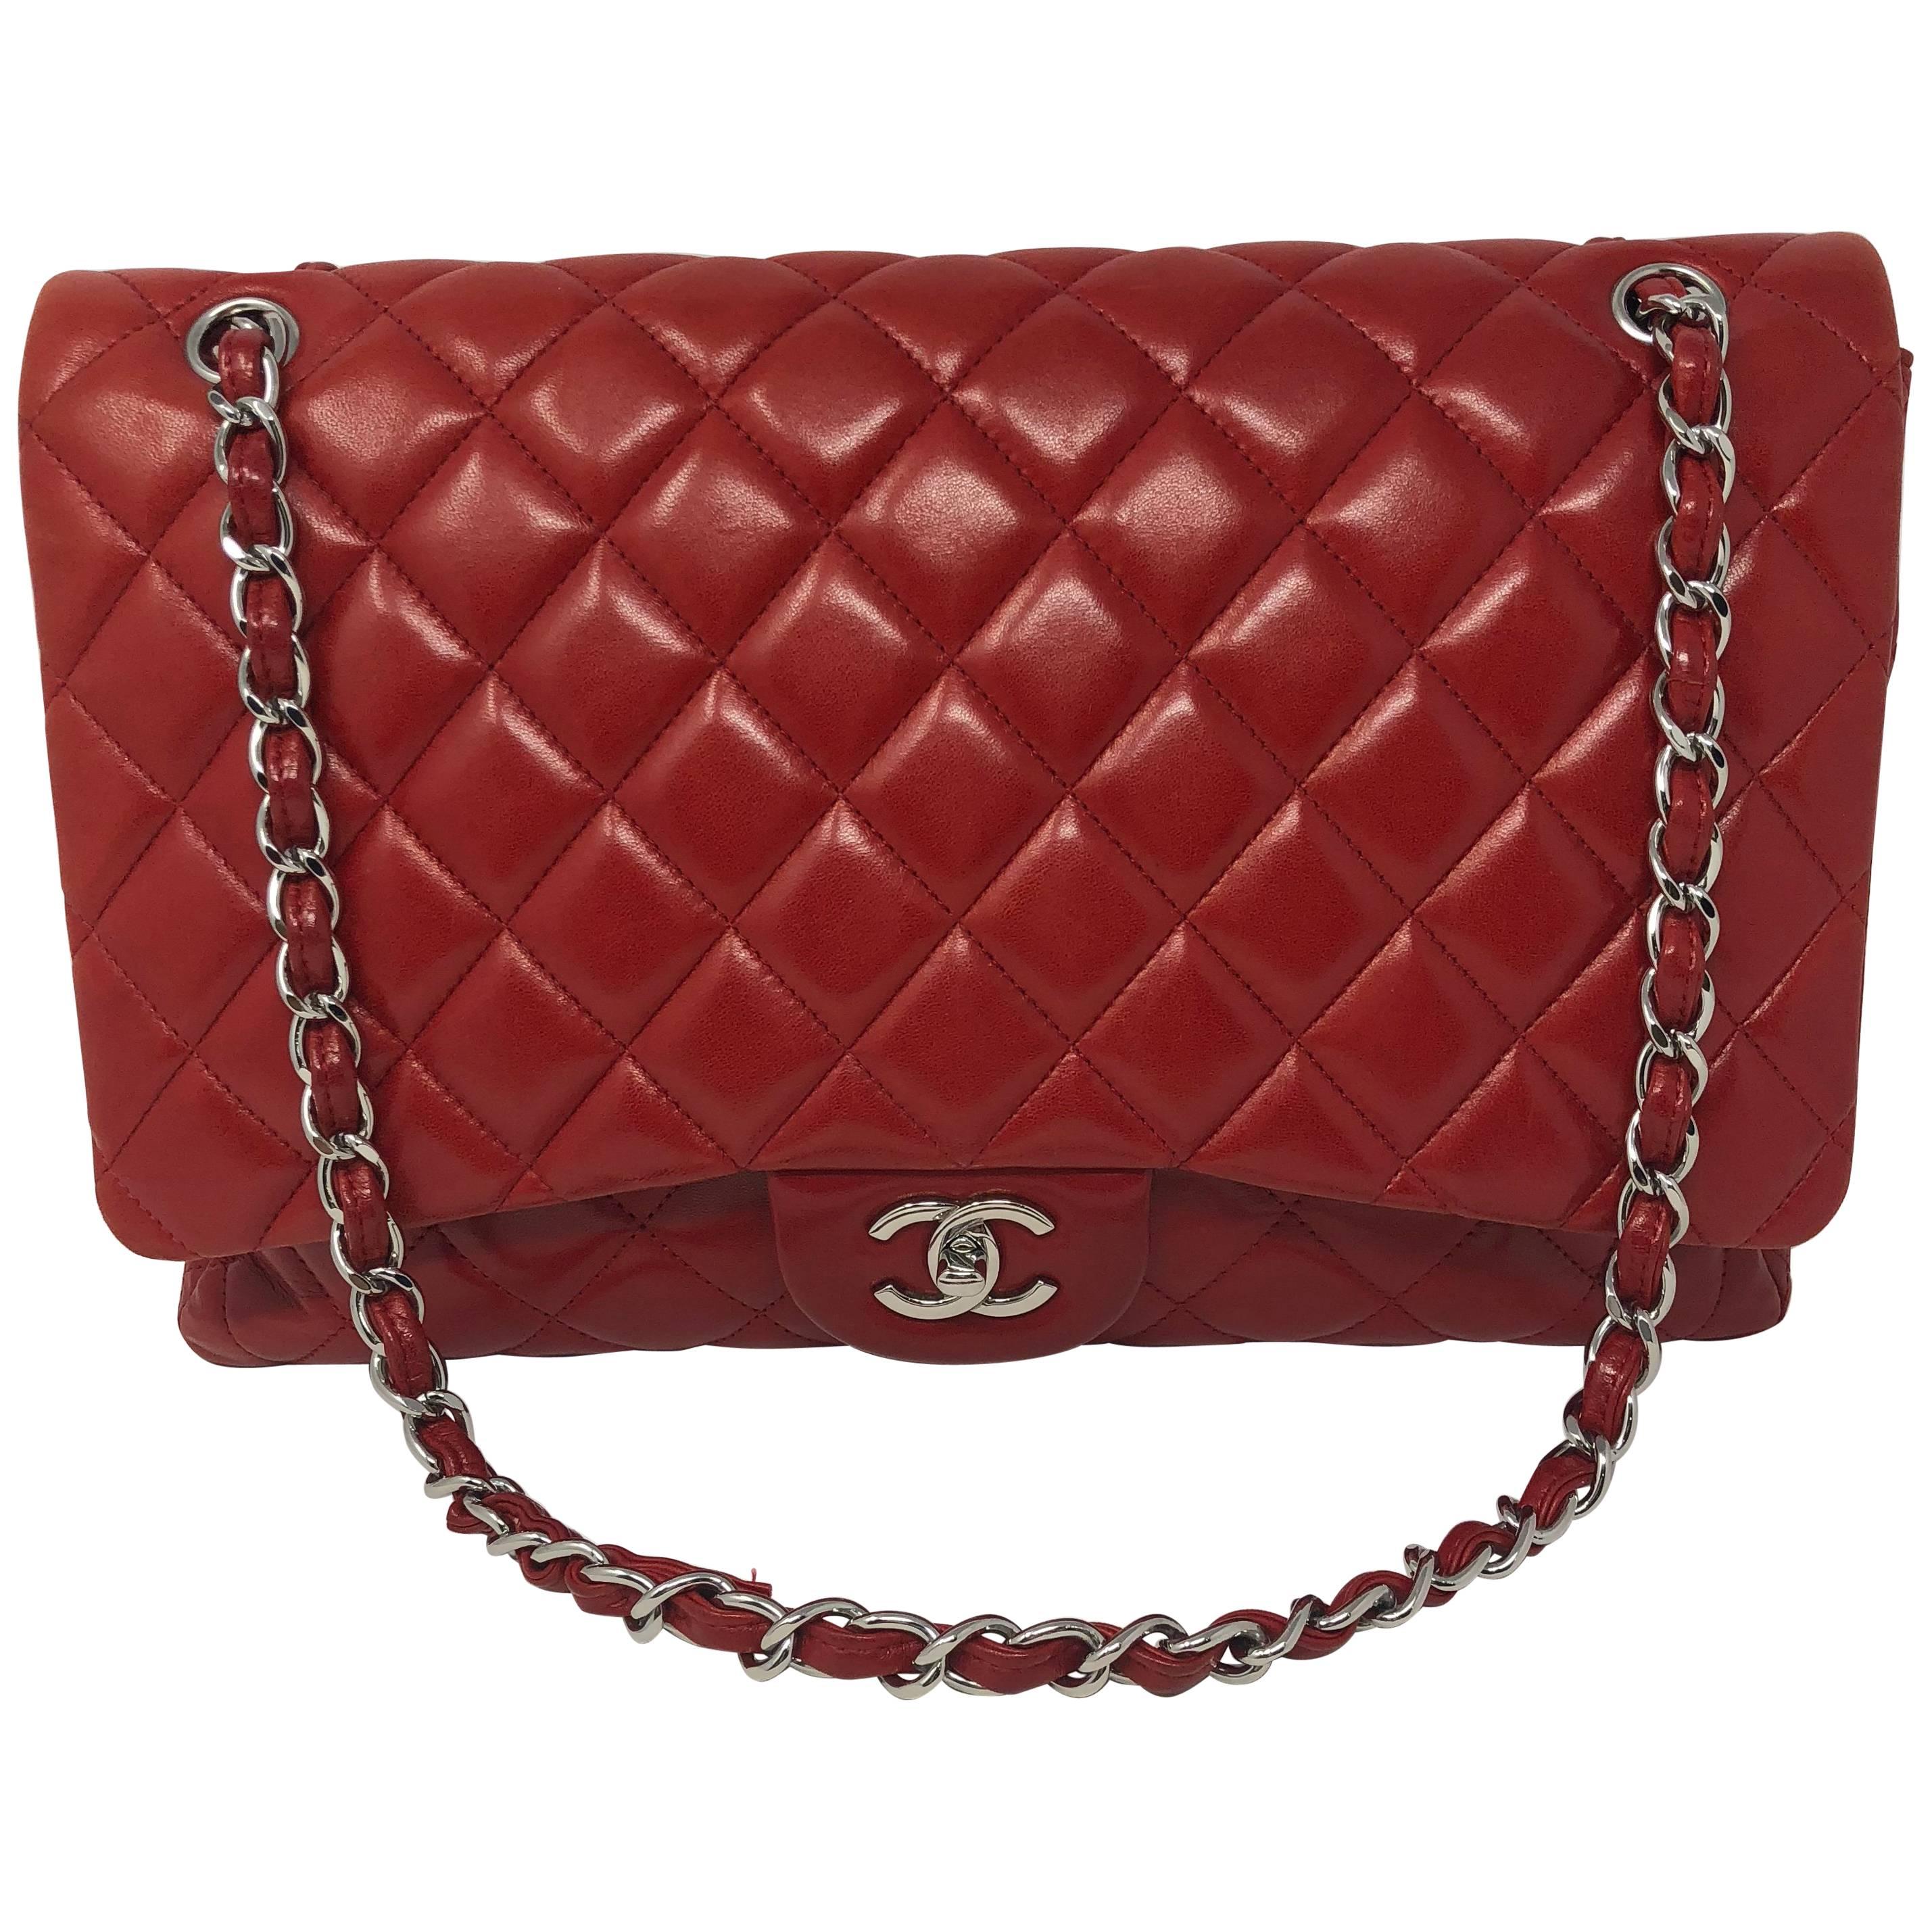 Red Chanel Maxi Lambskin Bag